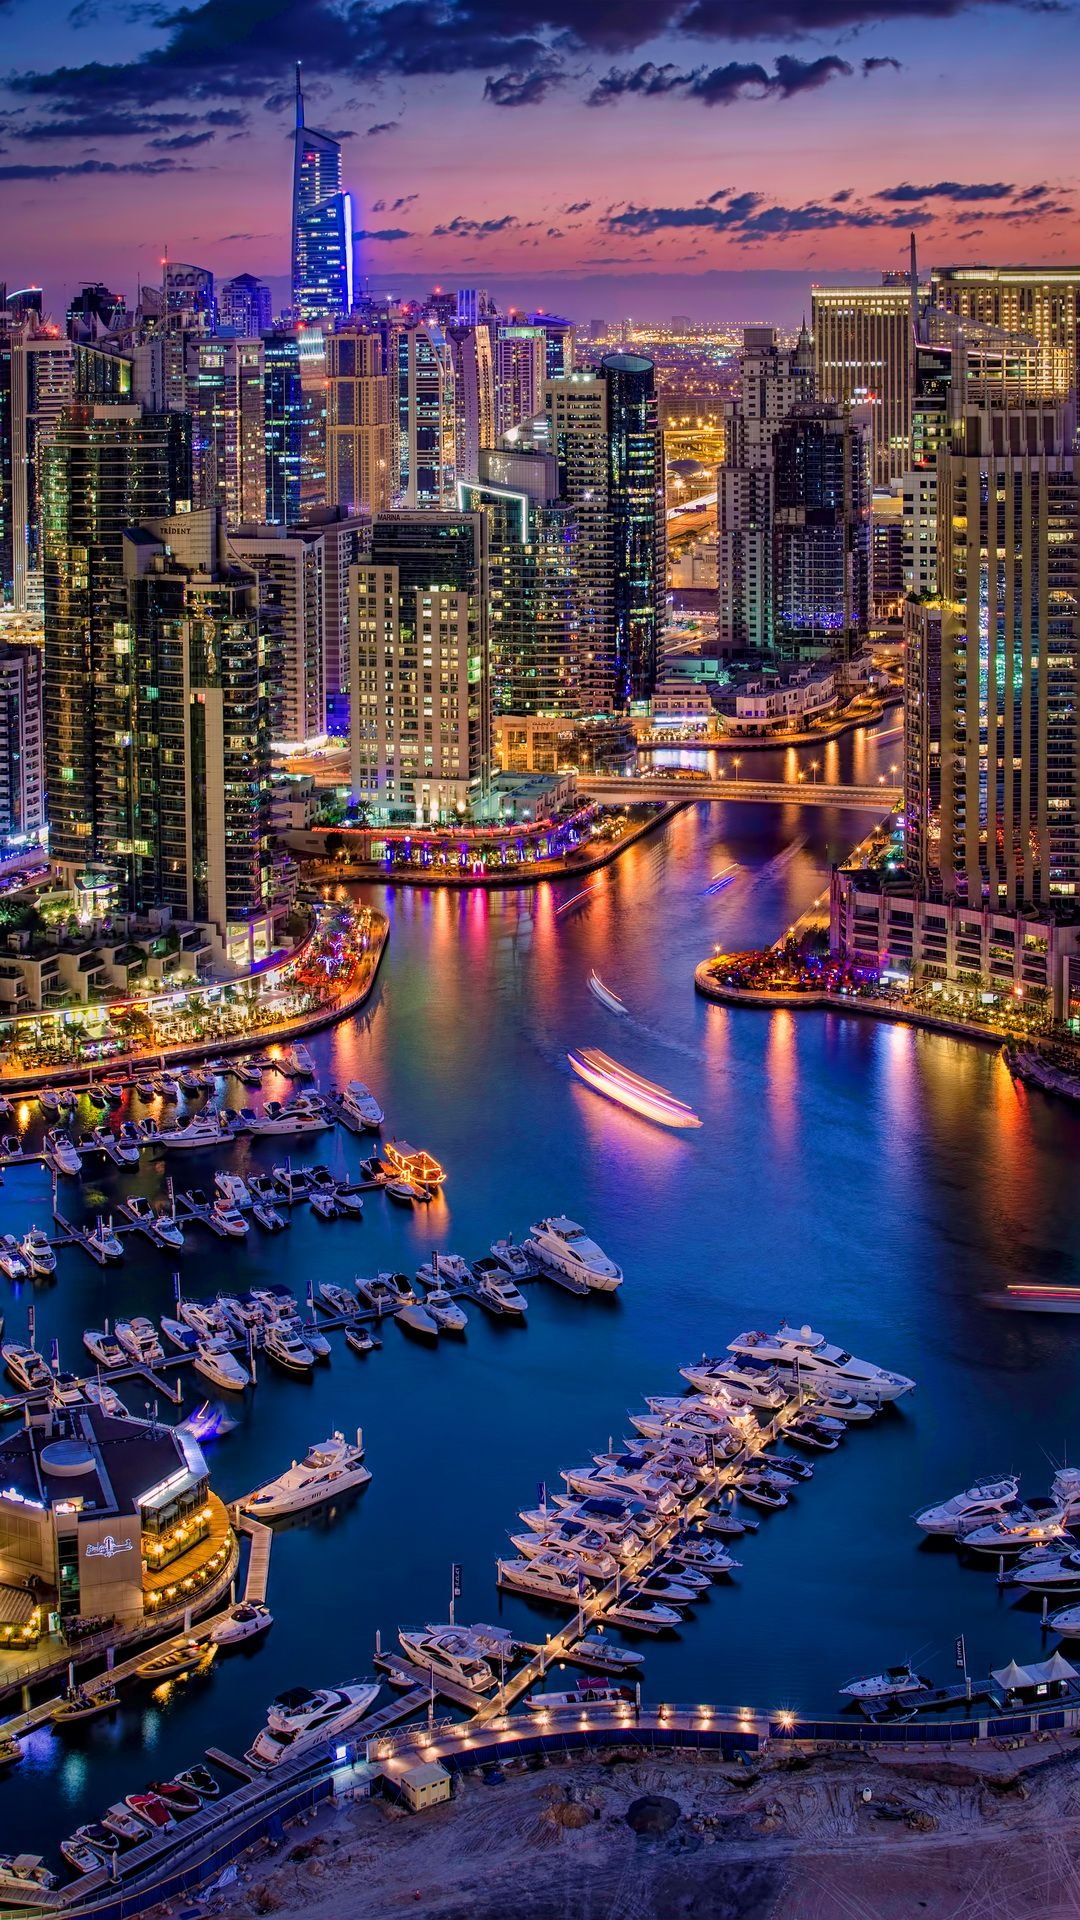 Dubai Uae Building Skyscrappers Night Wallpaper- [720x1280]